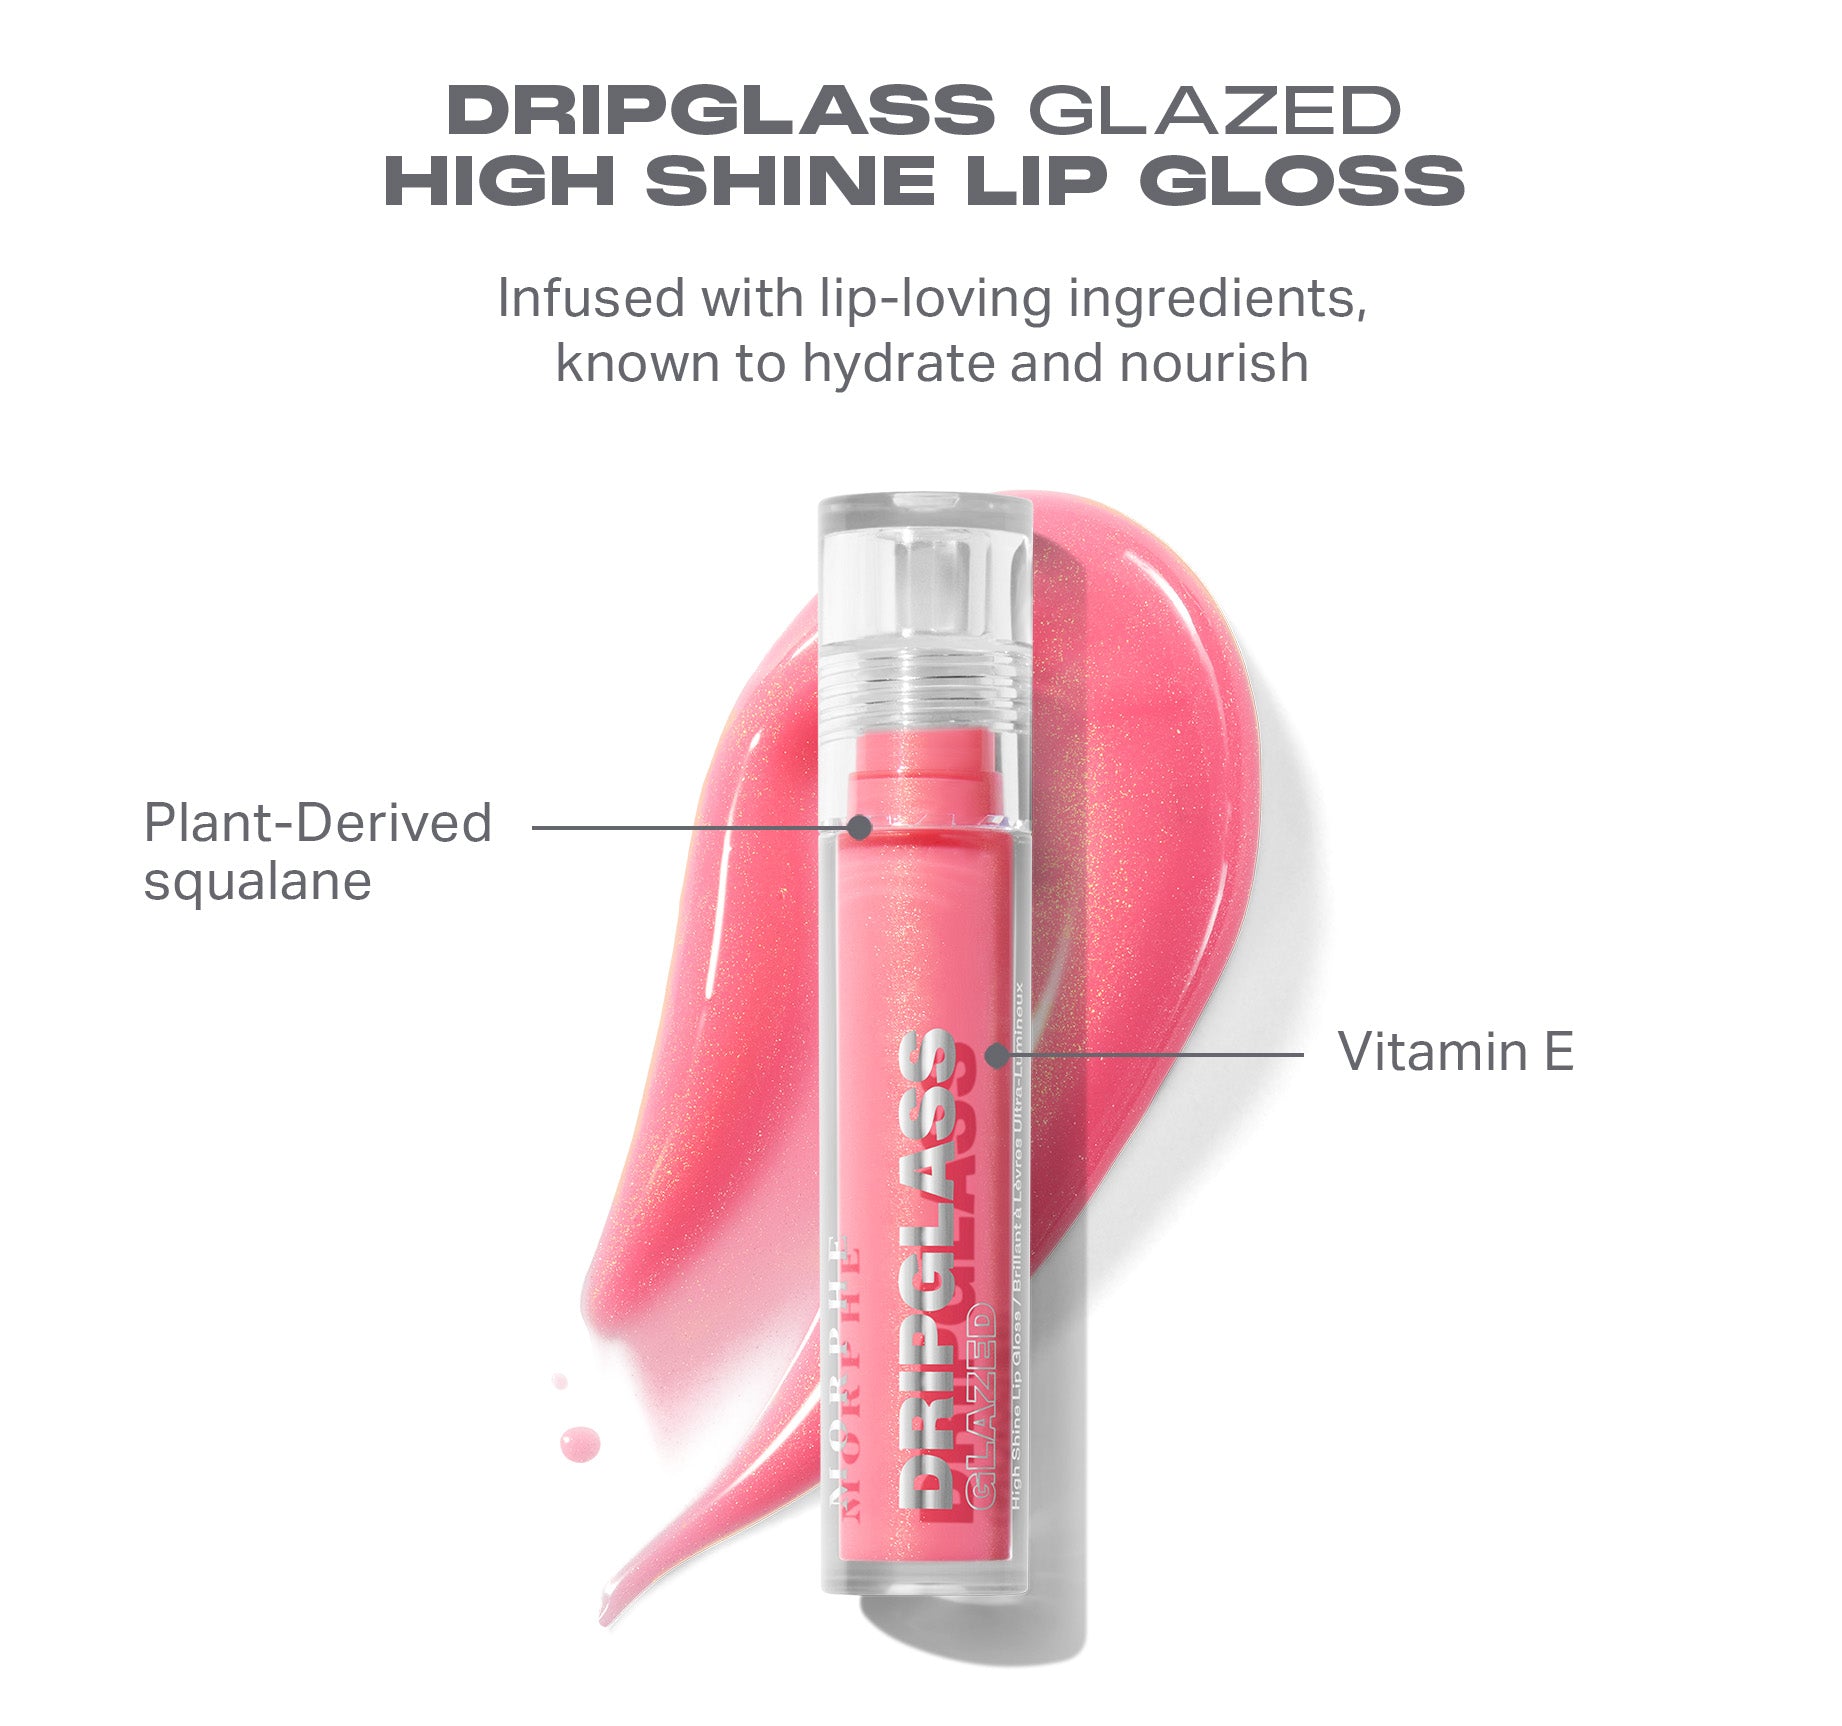 Dripglass Glazed High Shine Lip Gloss - Beige Beam - Image 7